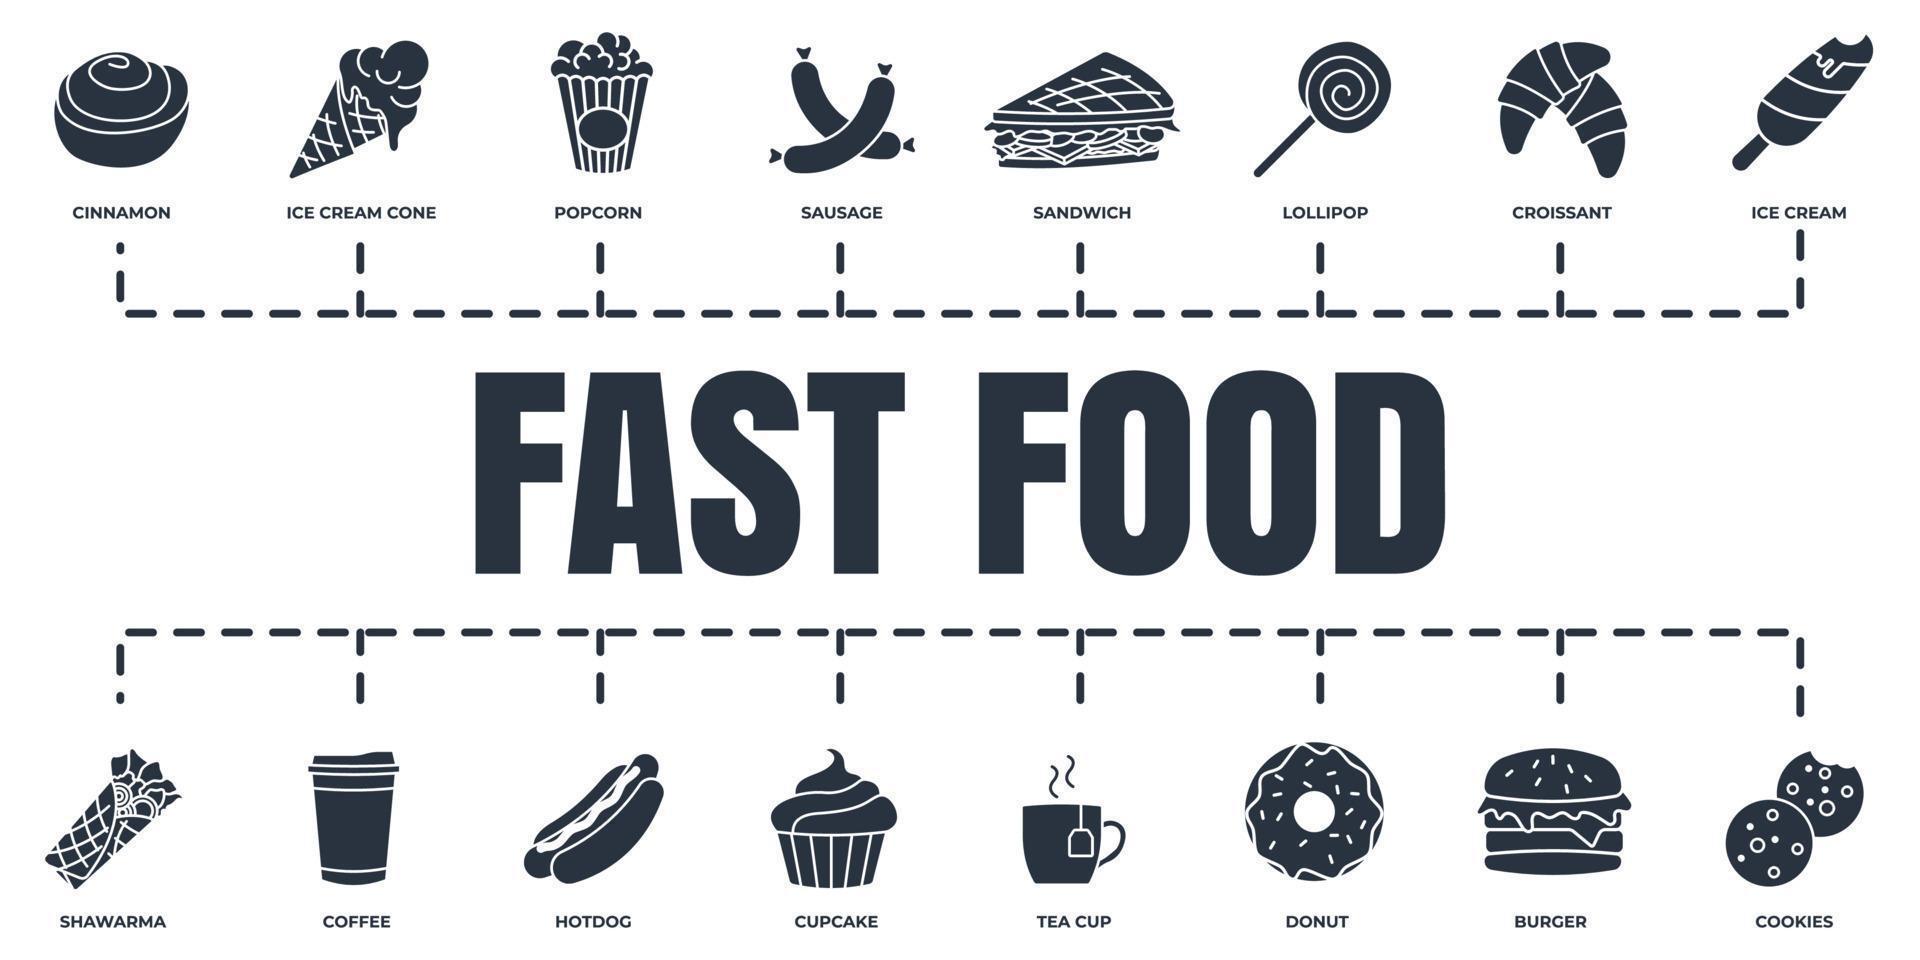 fast food banner web icon set. burger, ice cream, popcorn, cookies, cinnamon, hotdog, tea cup and more vector illustration concept.